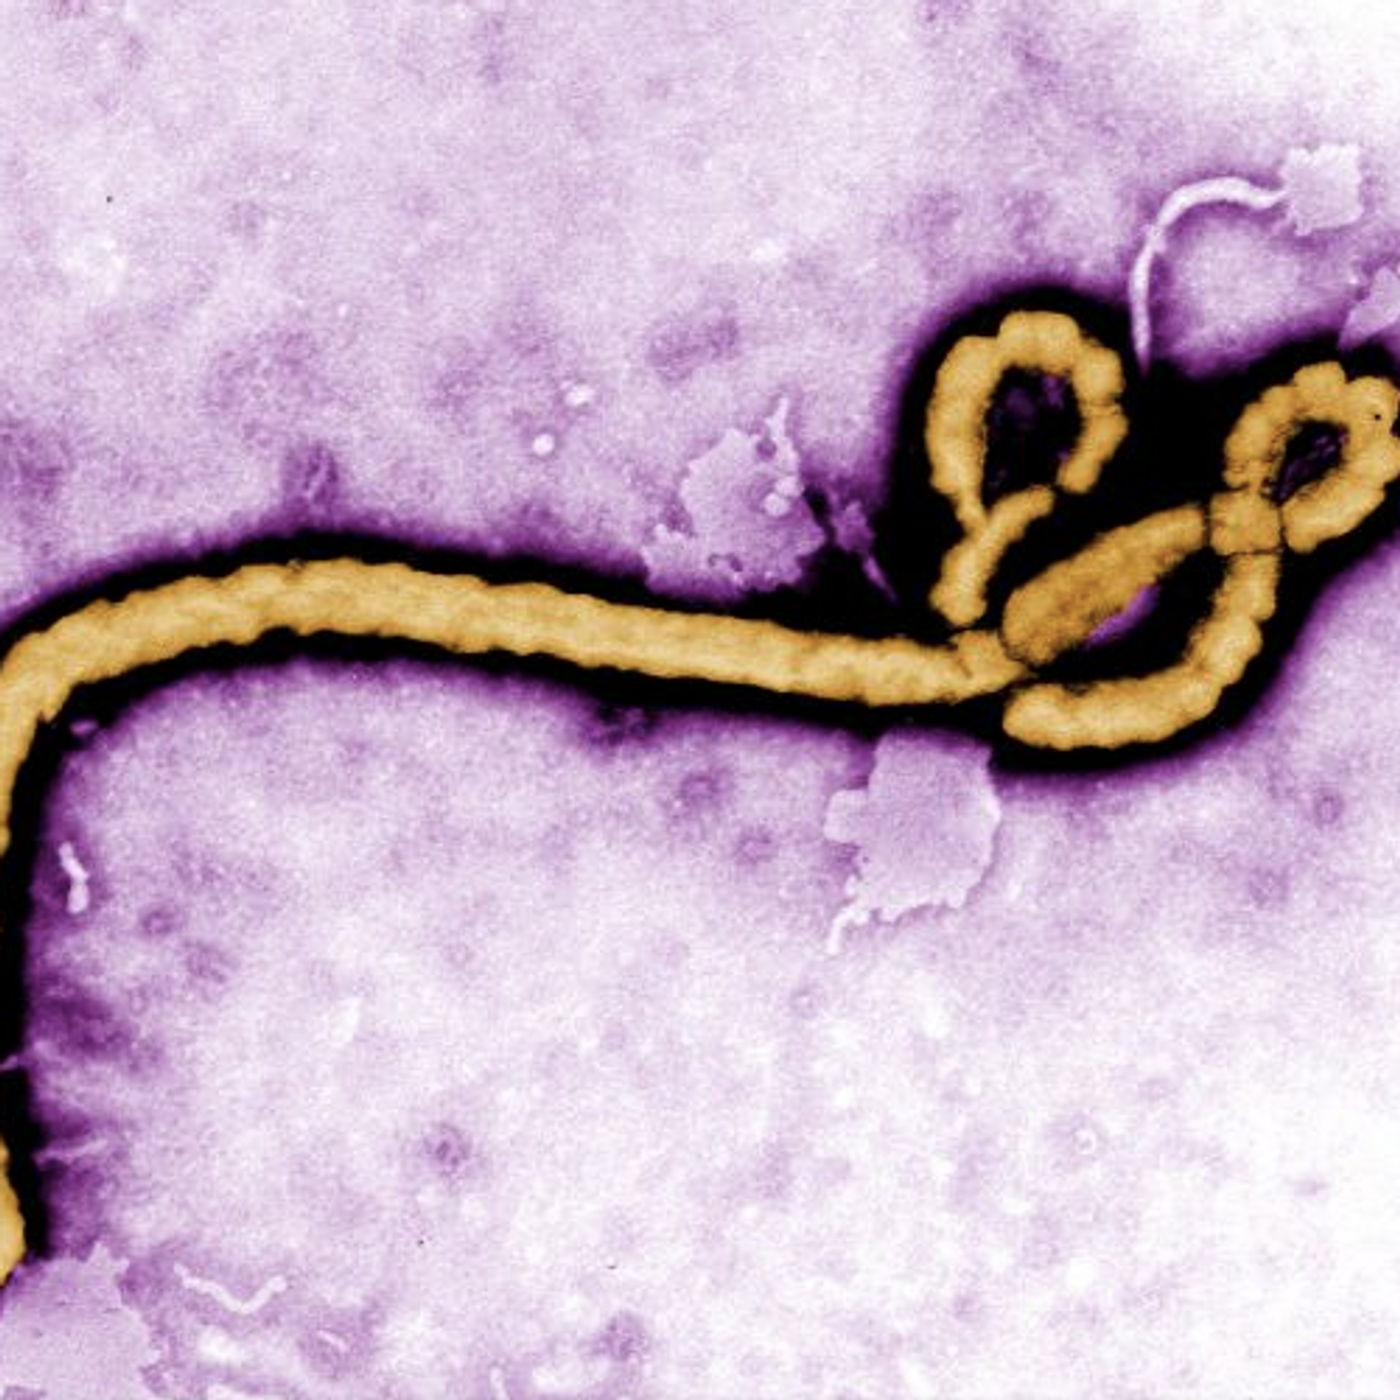 The Ebola virus / Credit: Pixnio